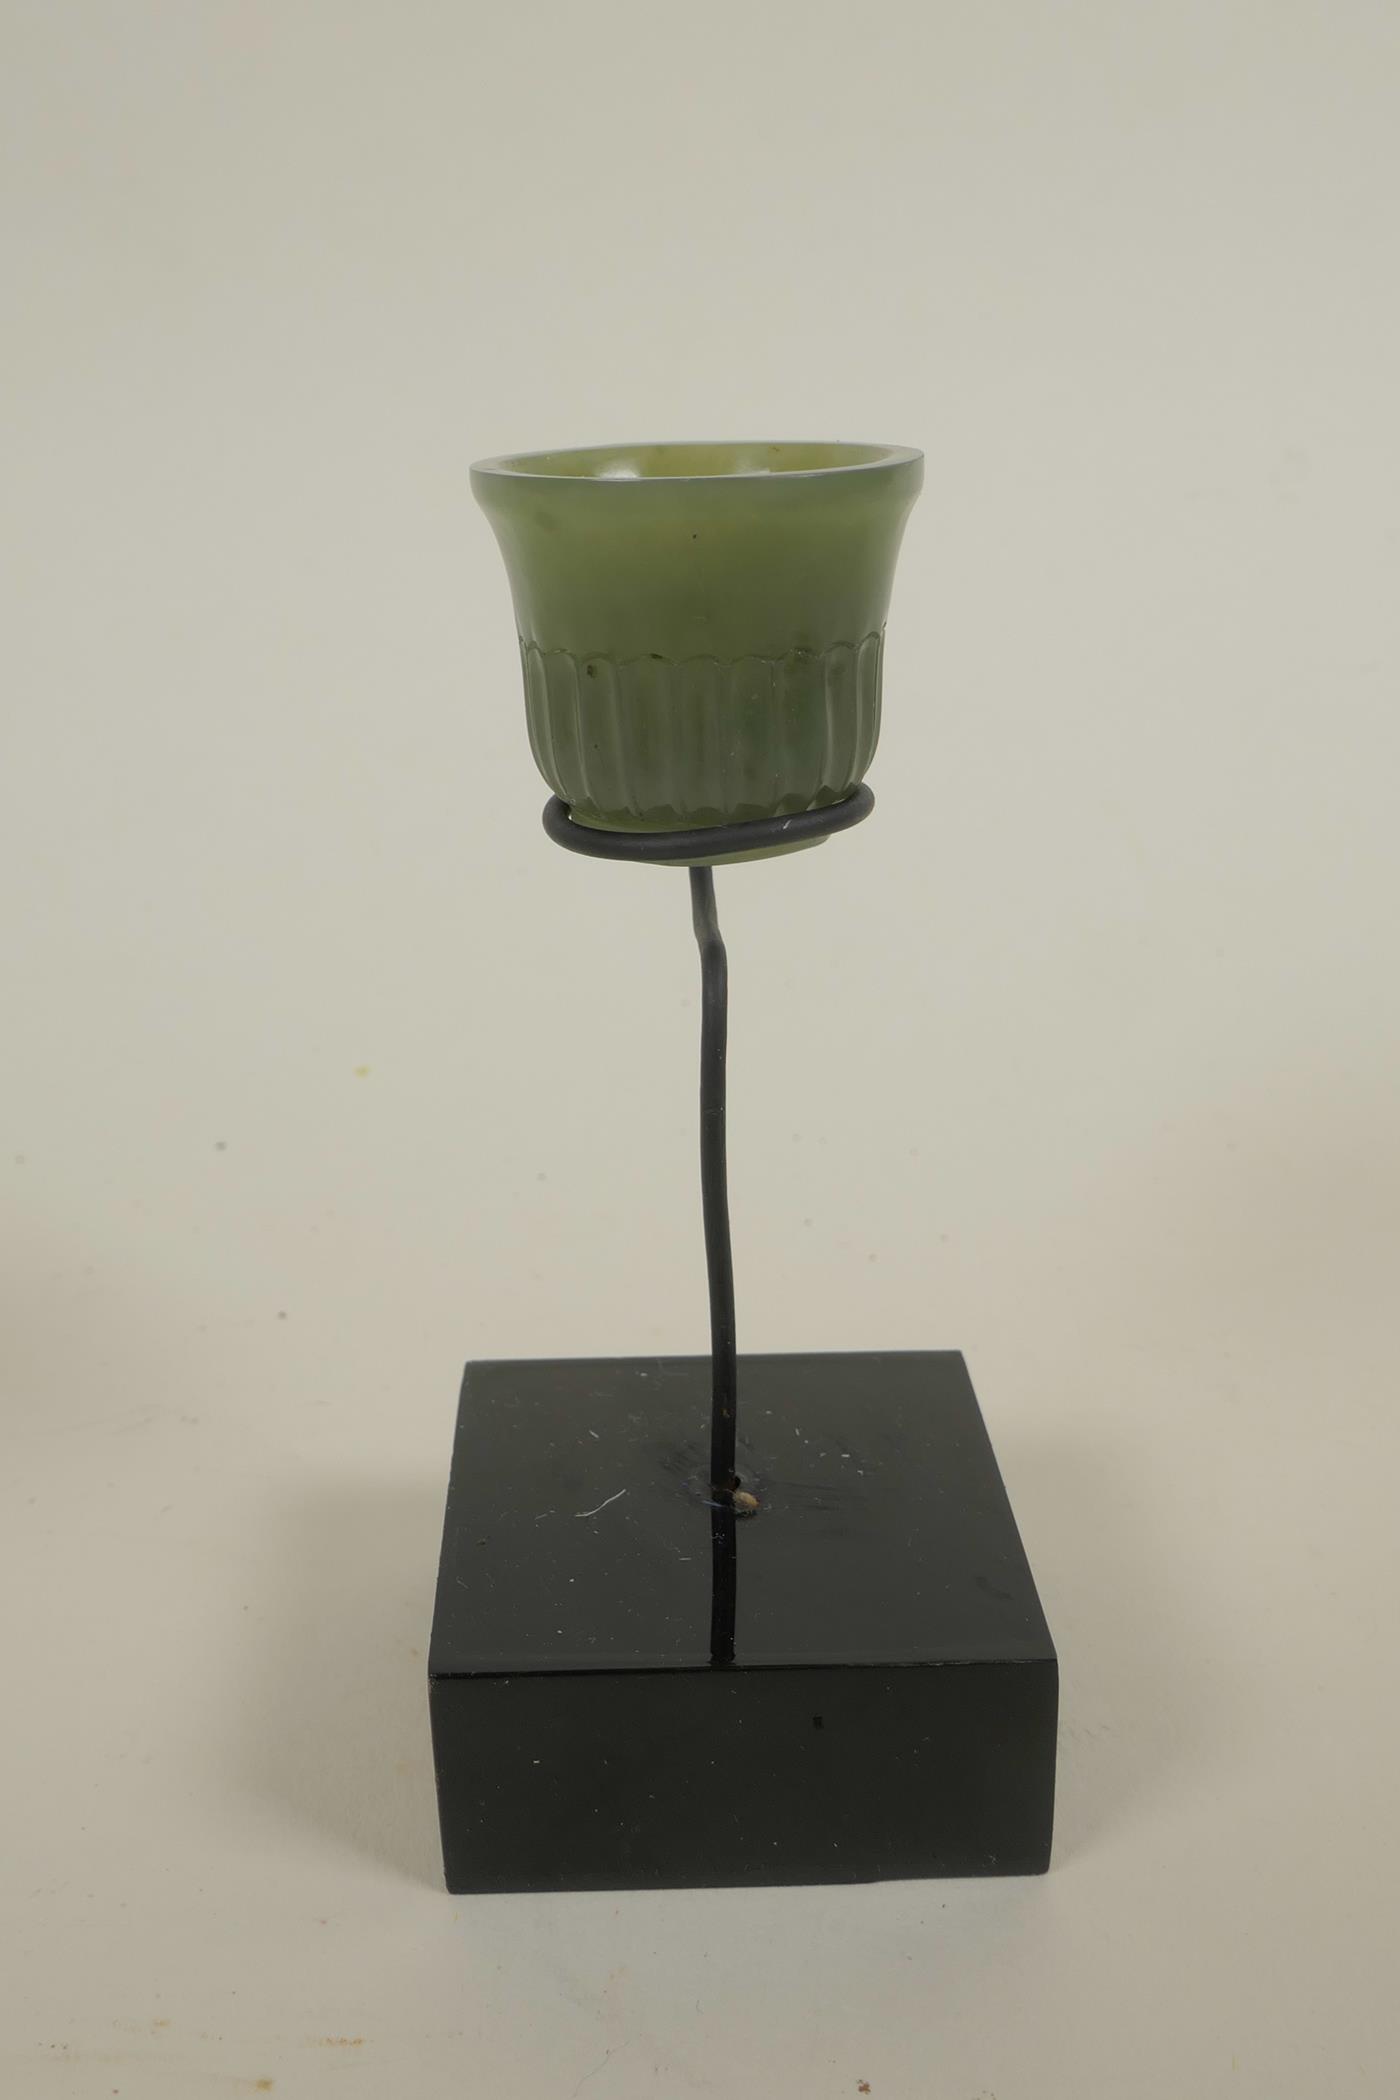 A Mughal miniature celadon jade cup, 1" diameter - Image 2 of 2